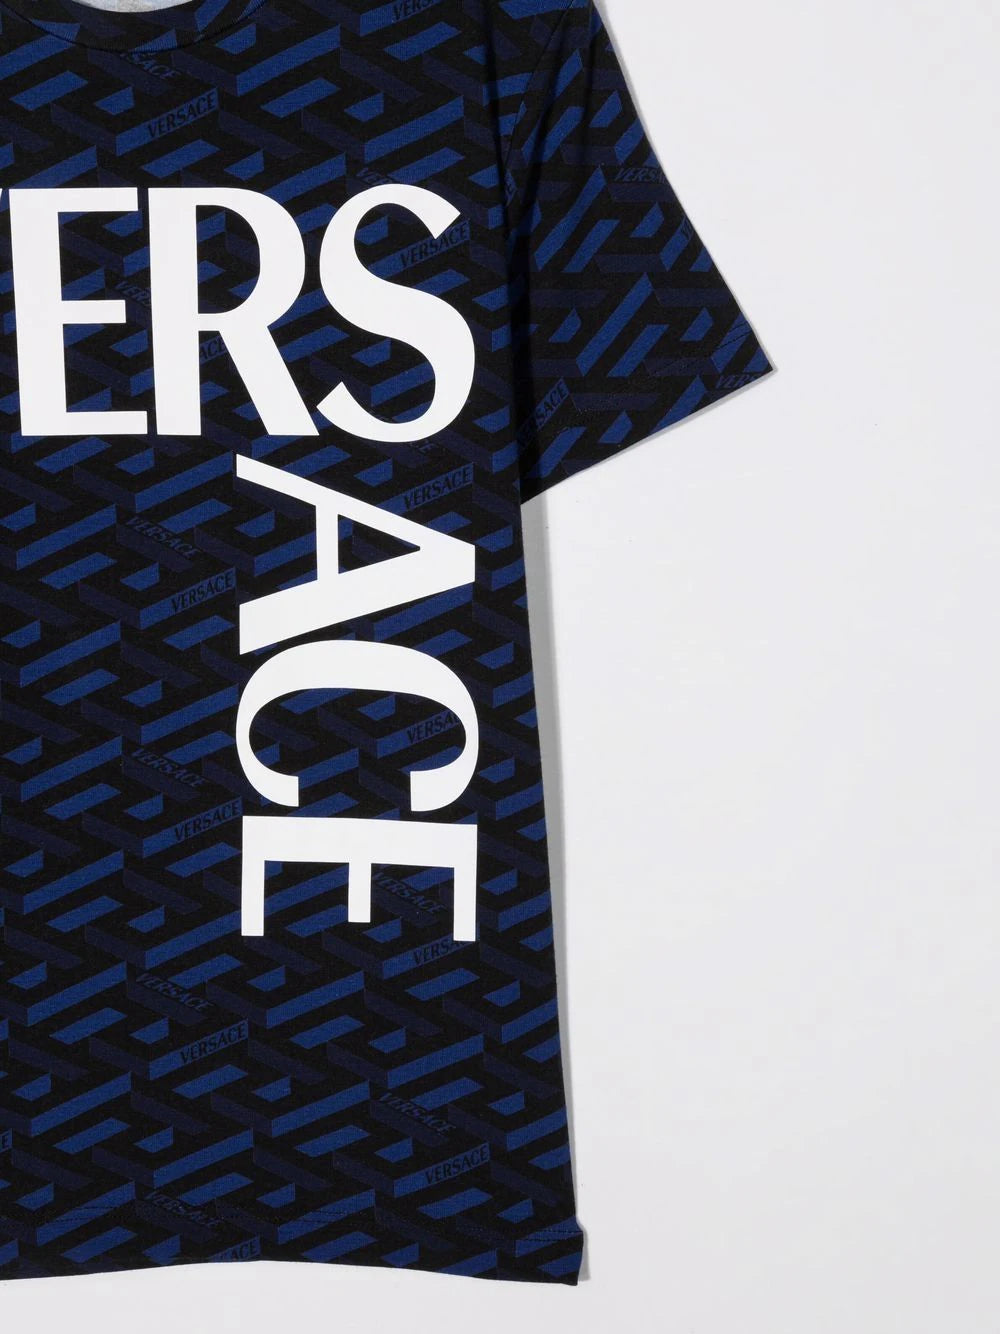 Versace Kids Blue & Black Logo T-shirt